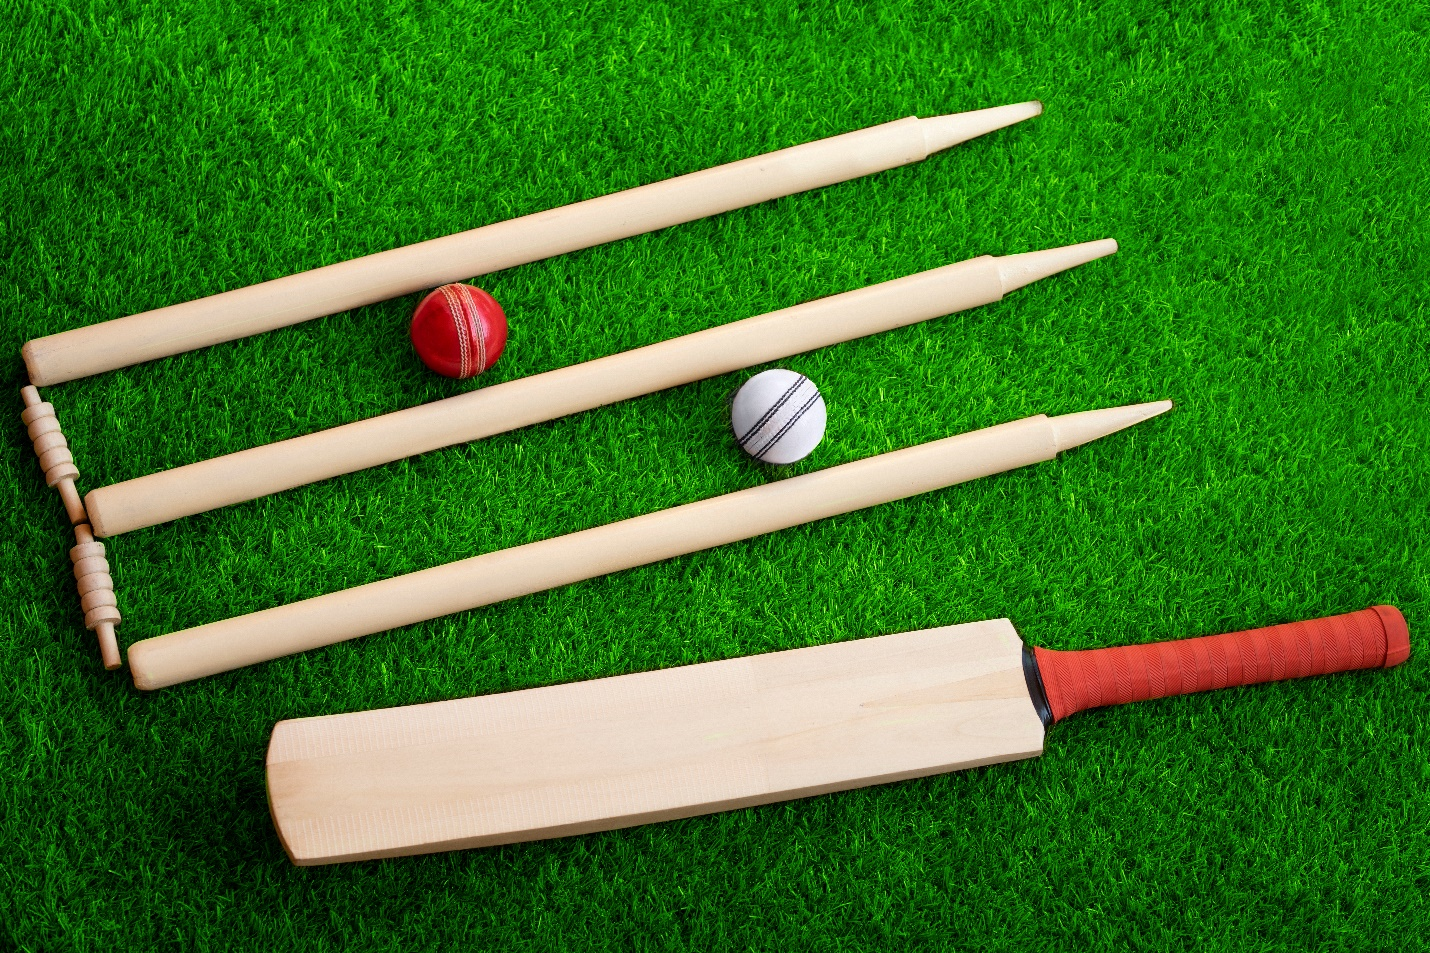 Cricket bat, ball, and stumps